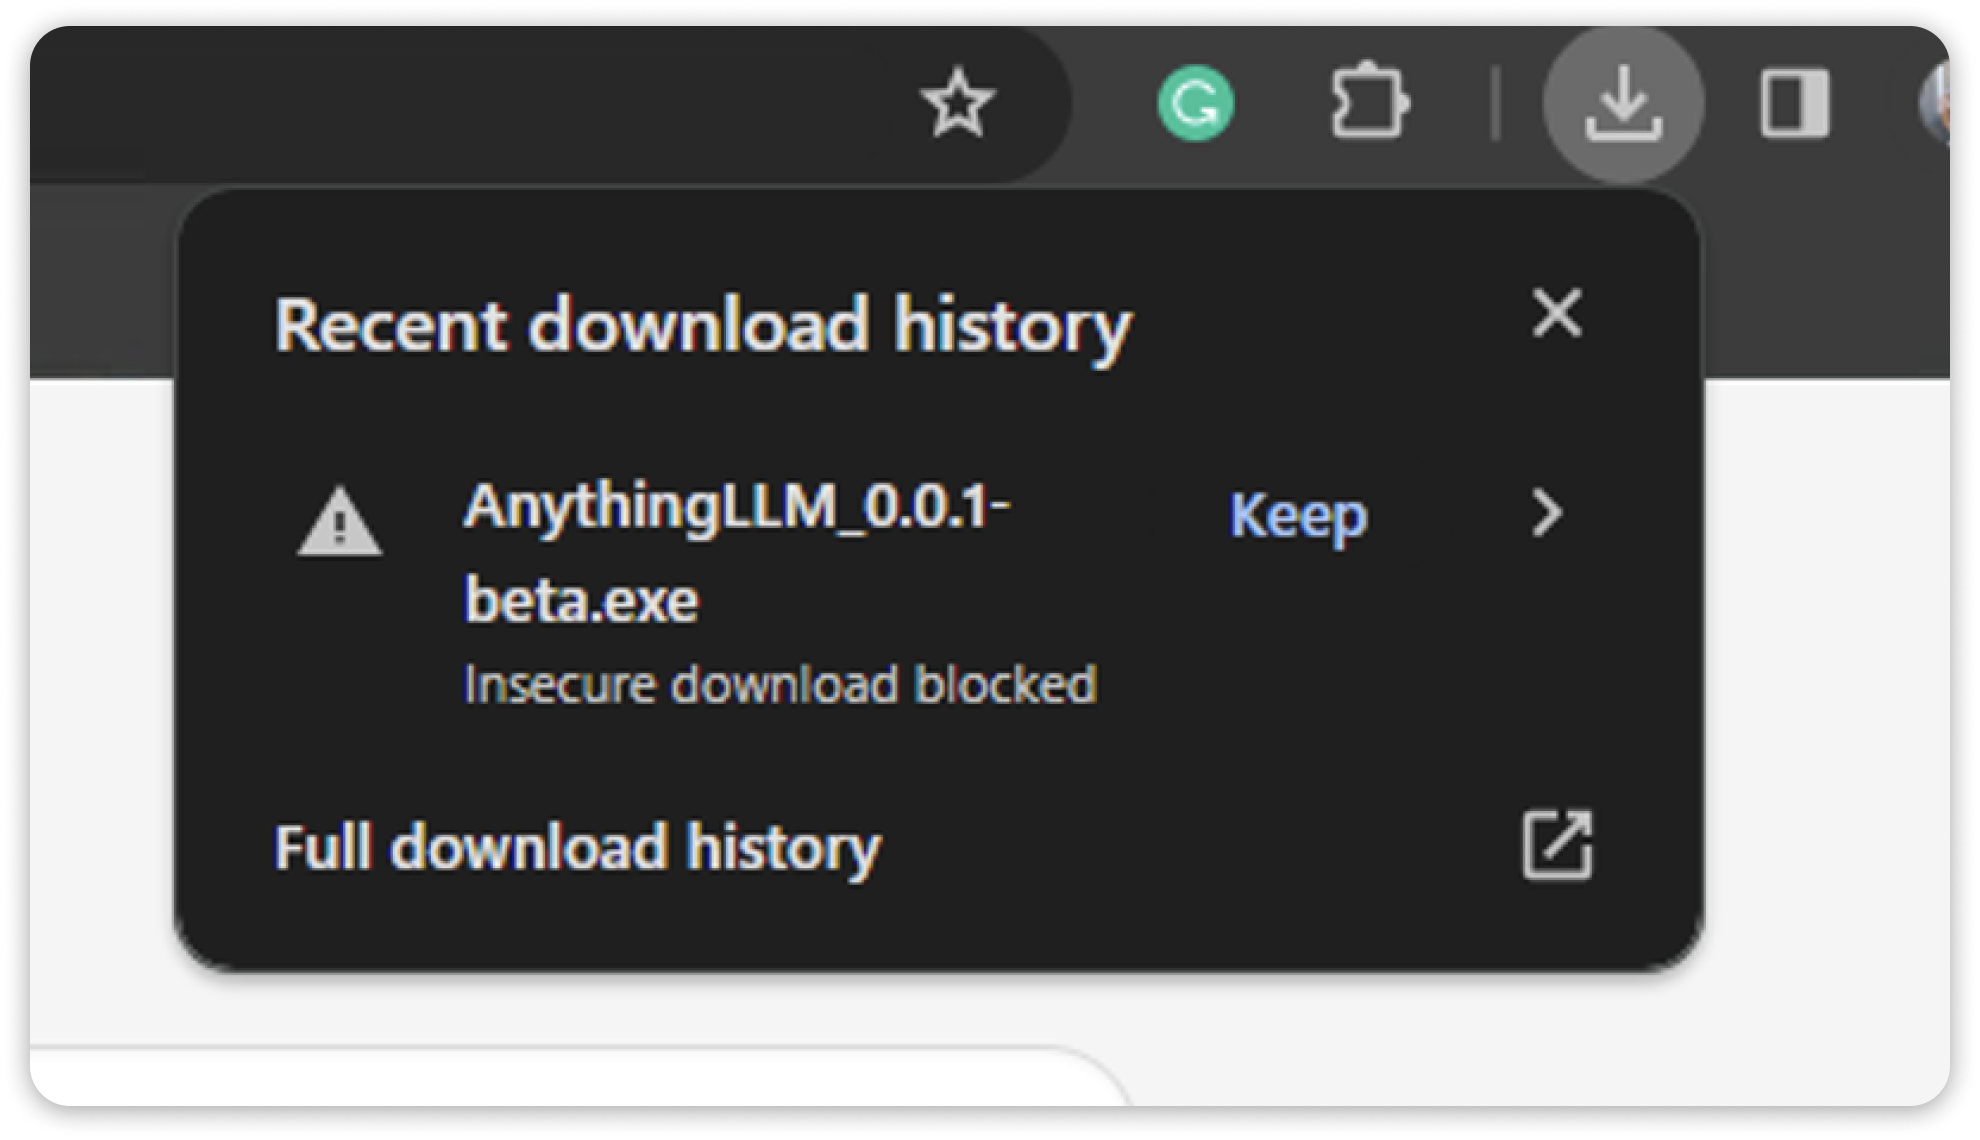 AnythingLLM Windows Install Browser Warning